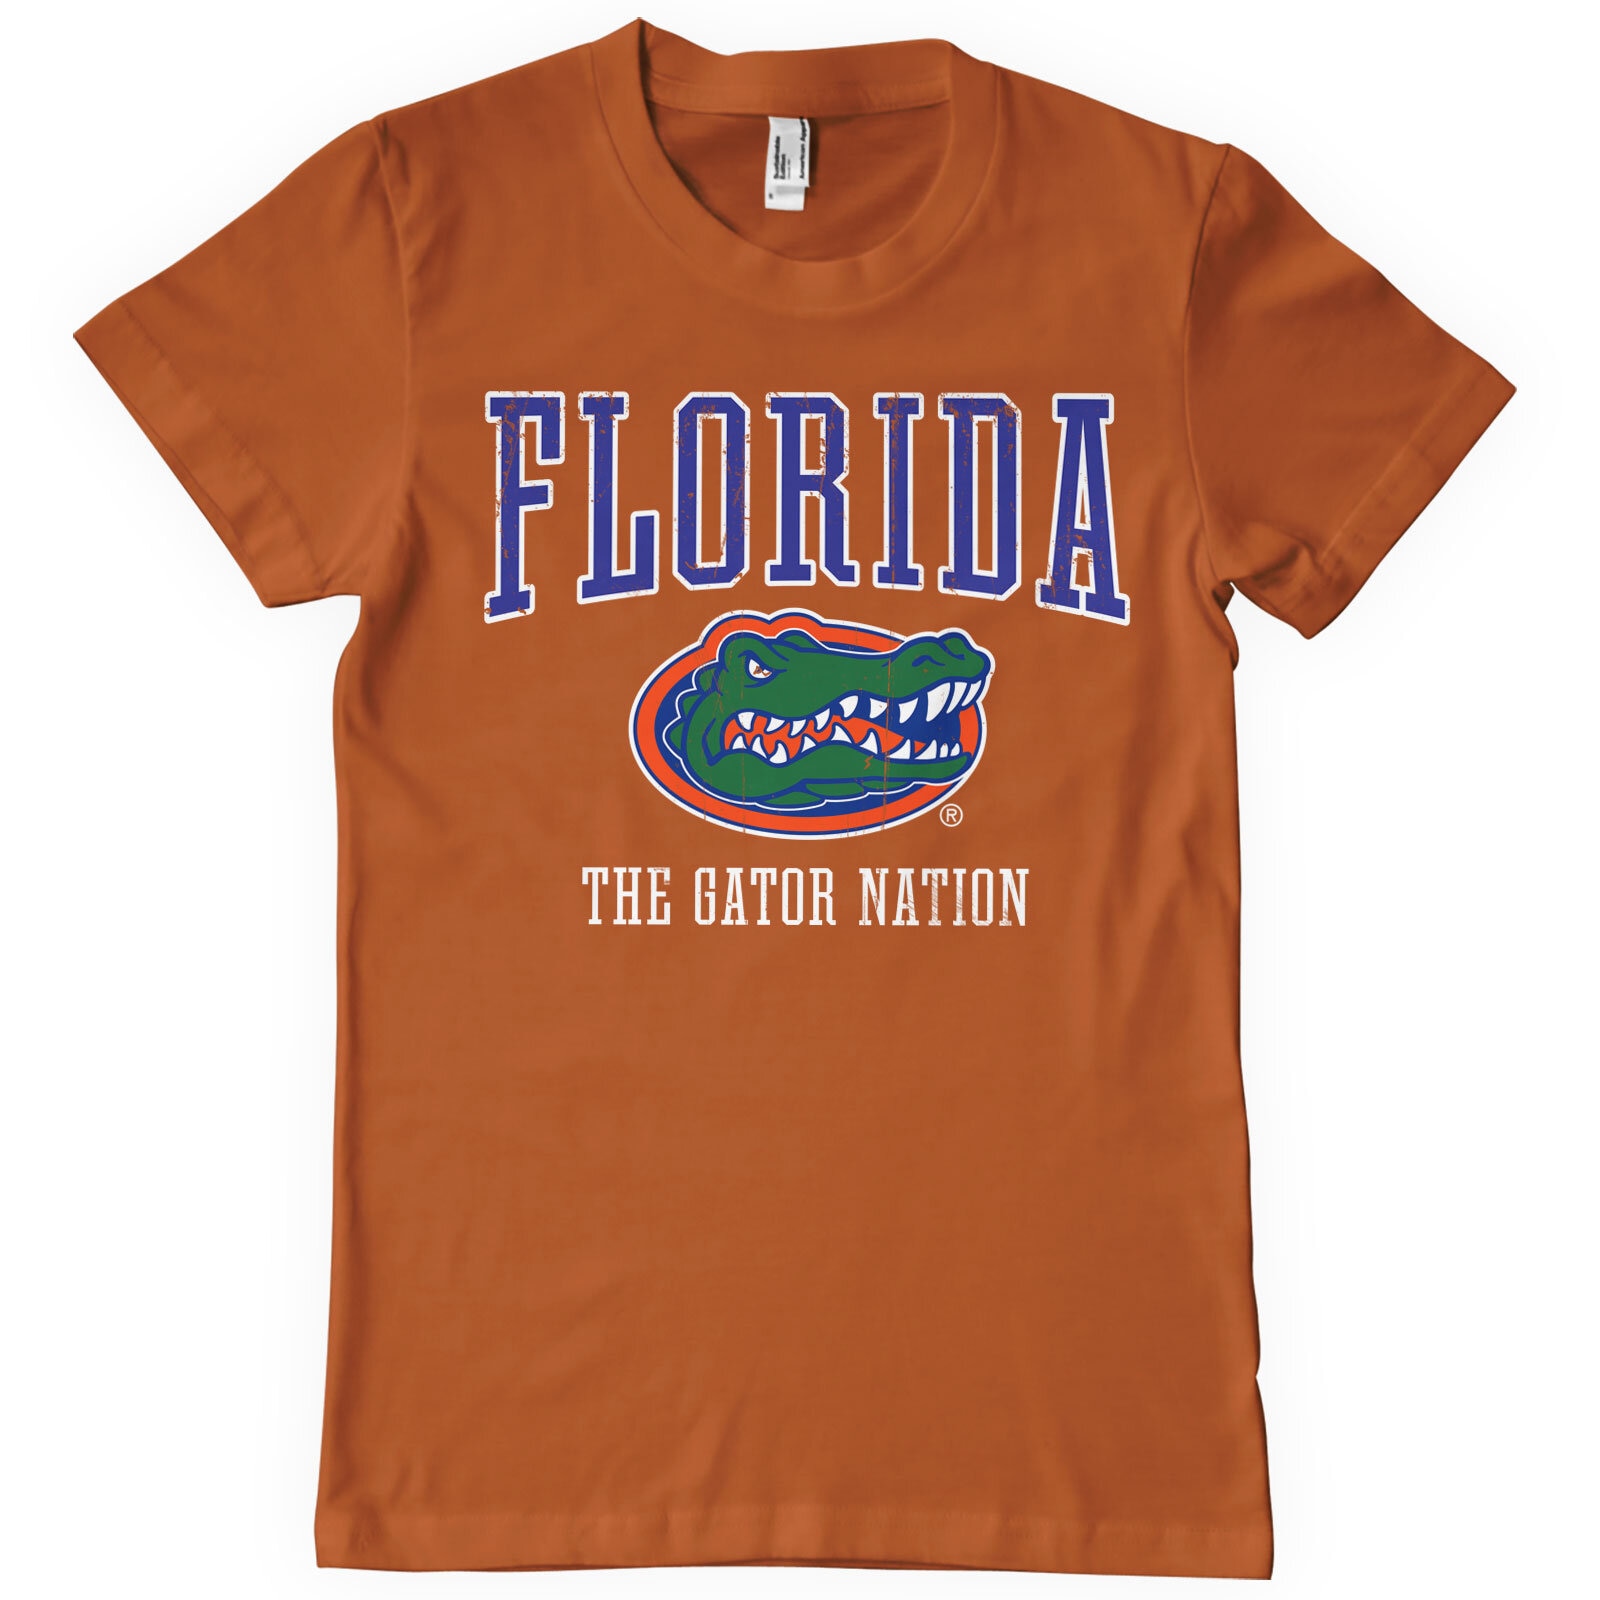 Florida - The Gator Nation T-Shirt